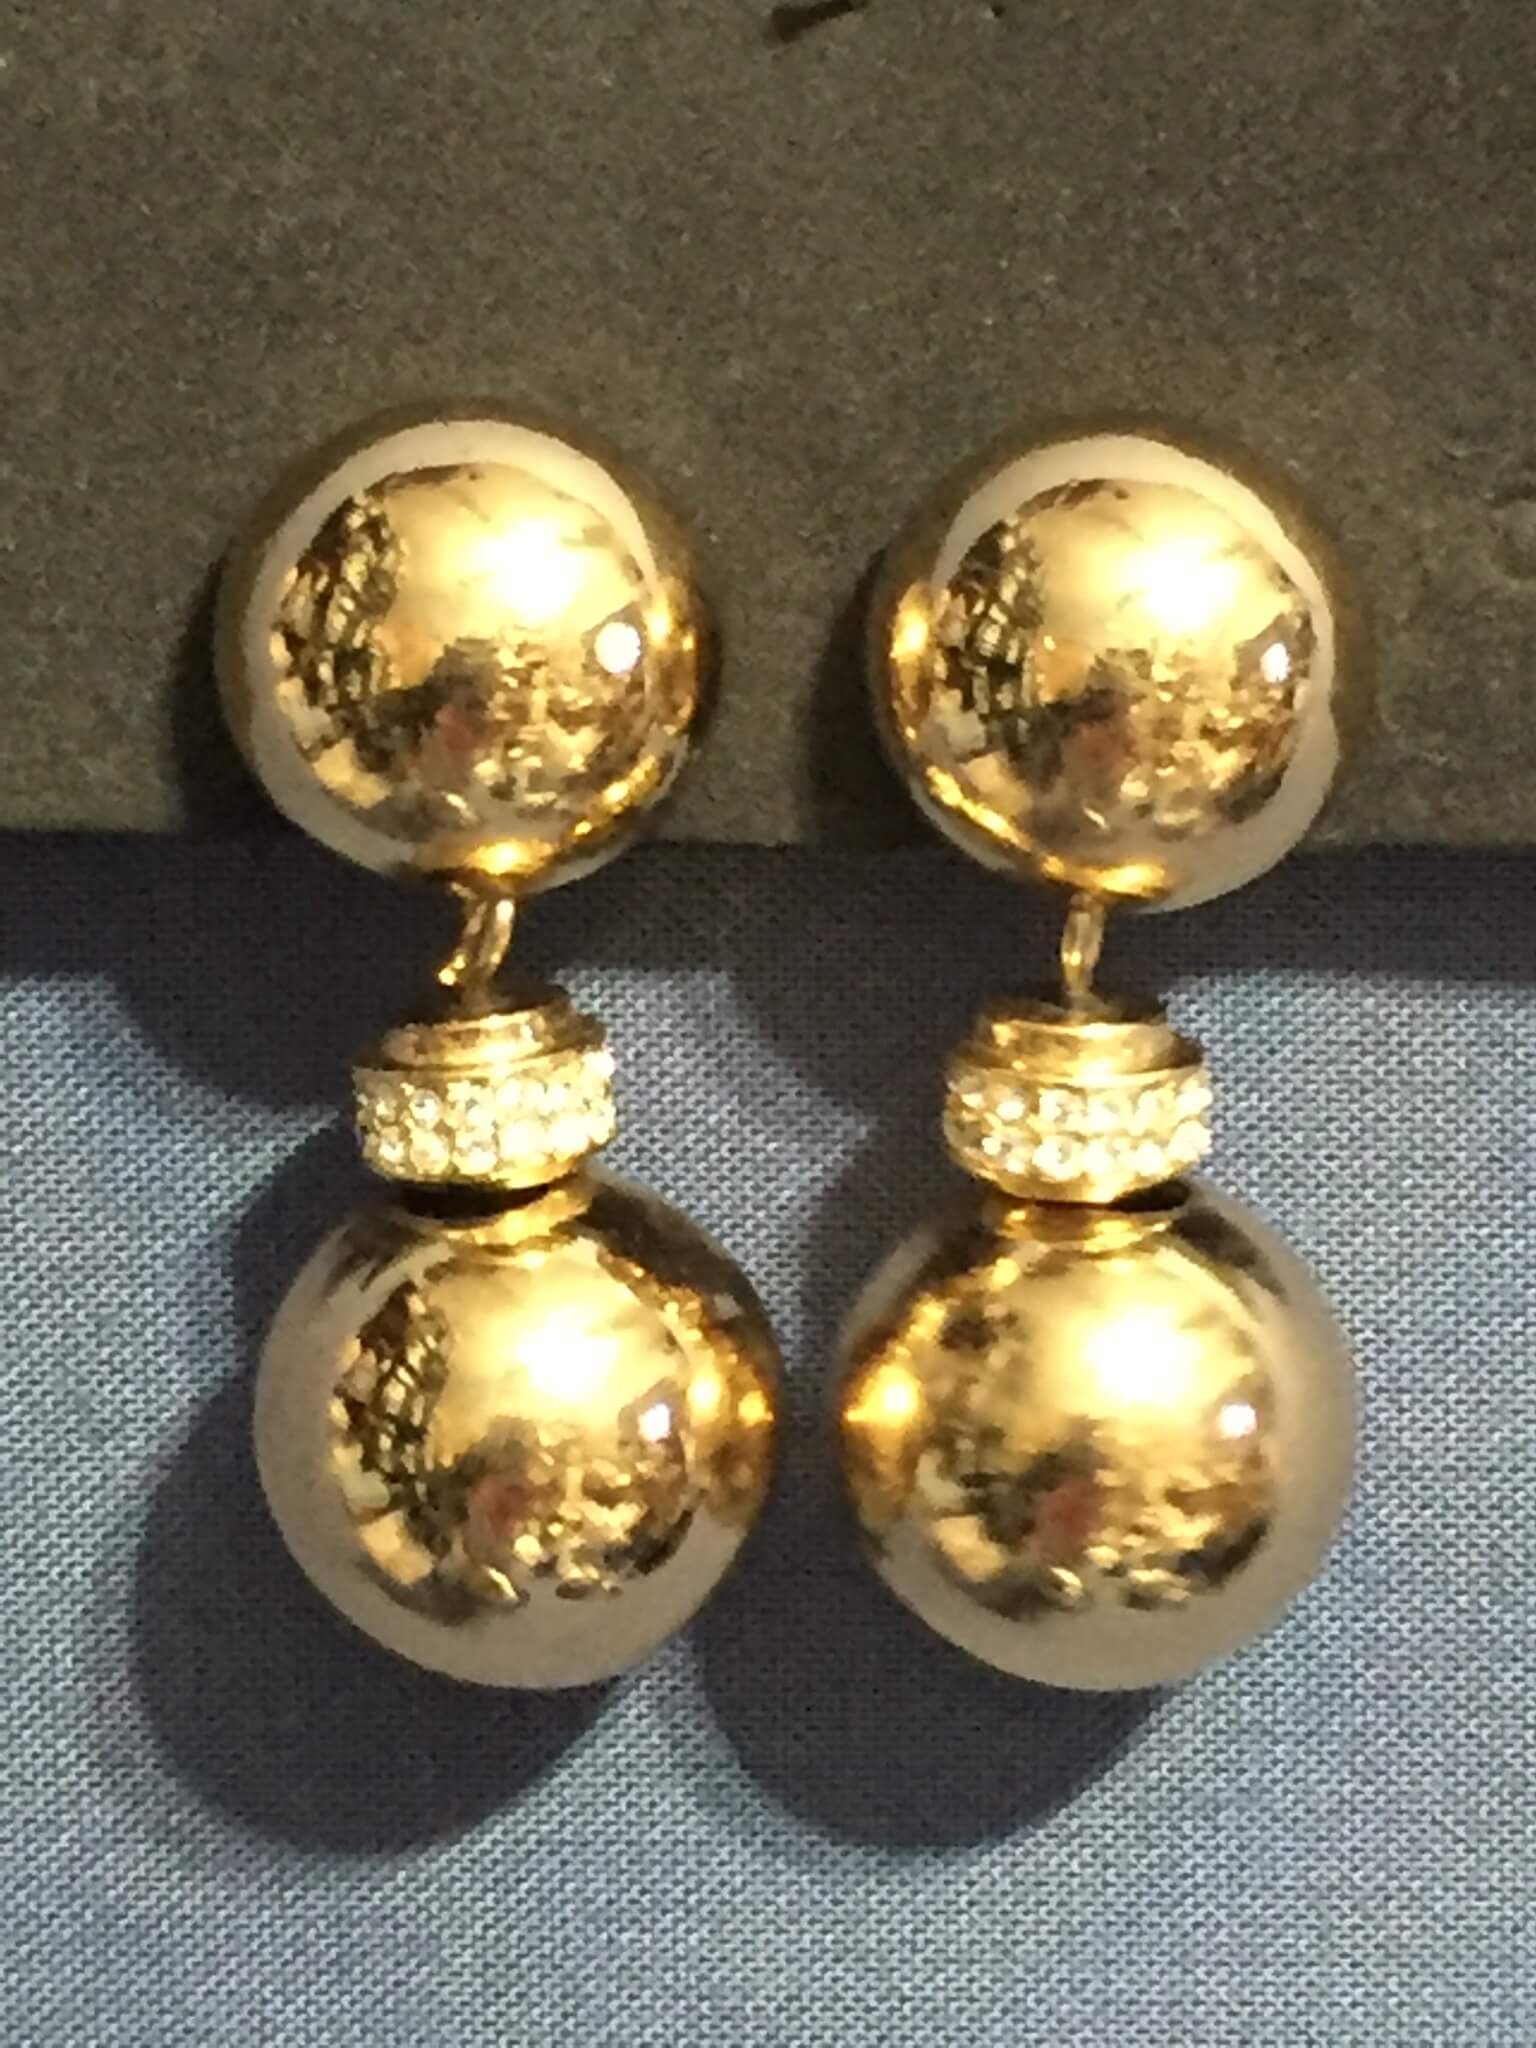 dior double ball earrings